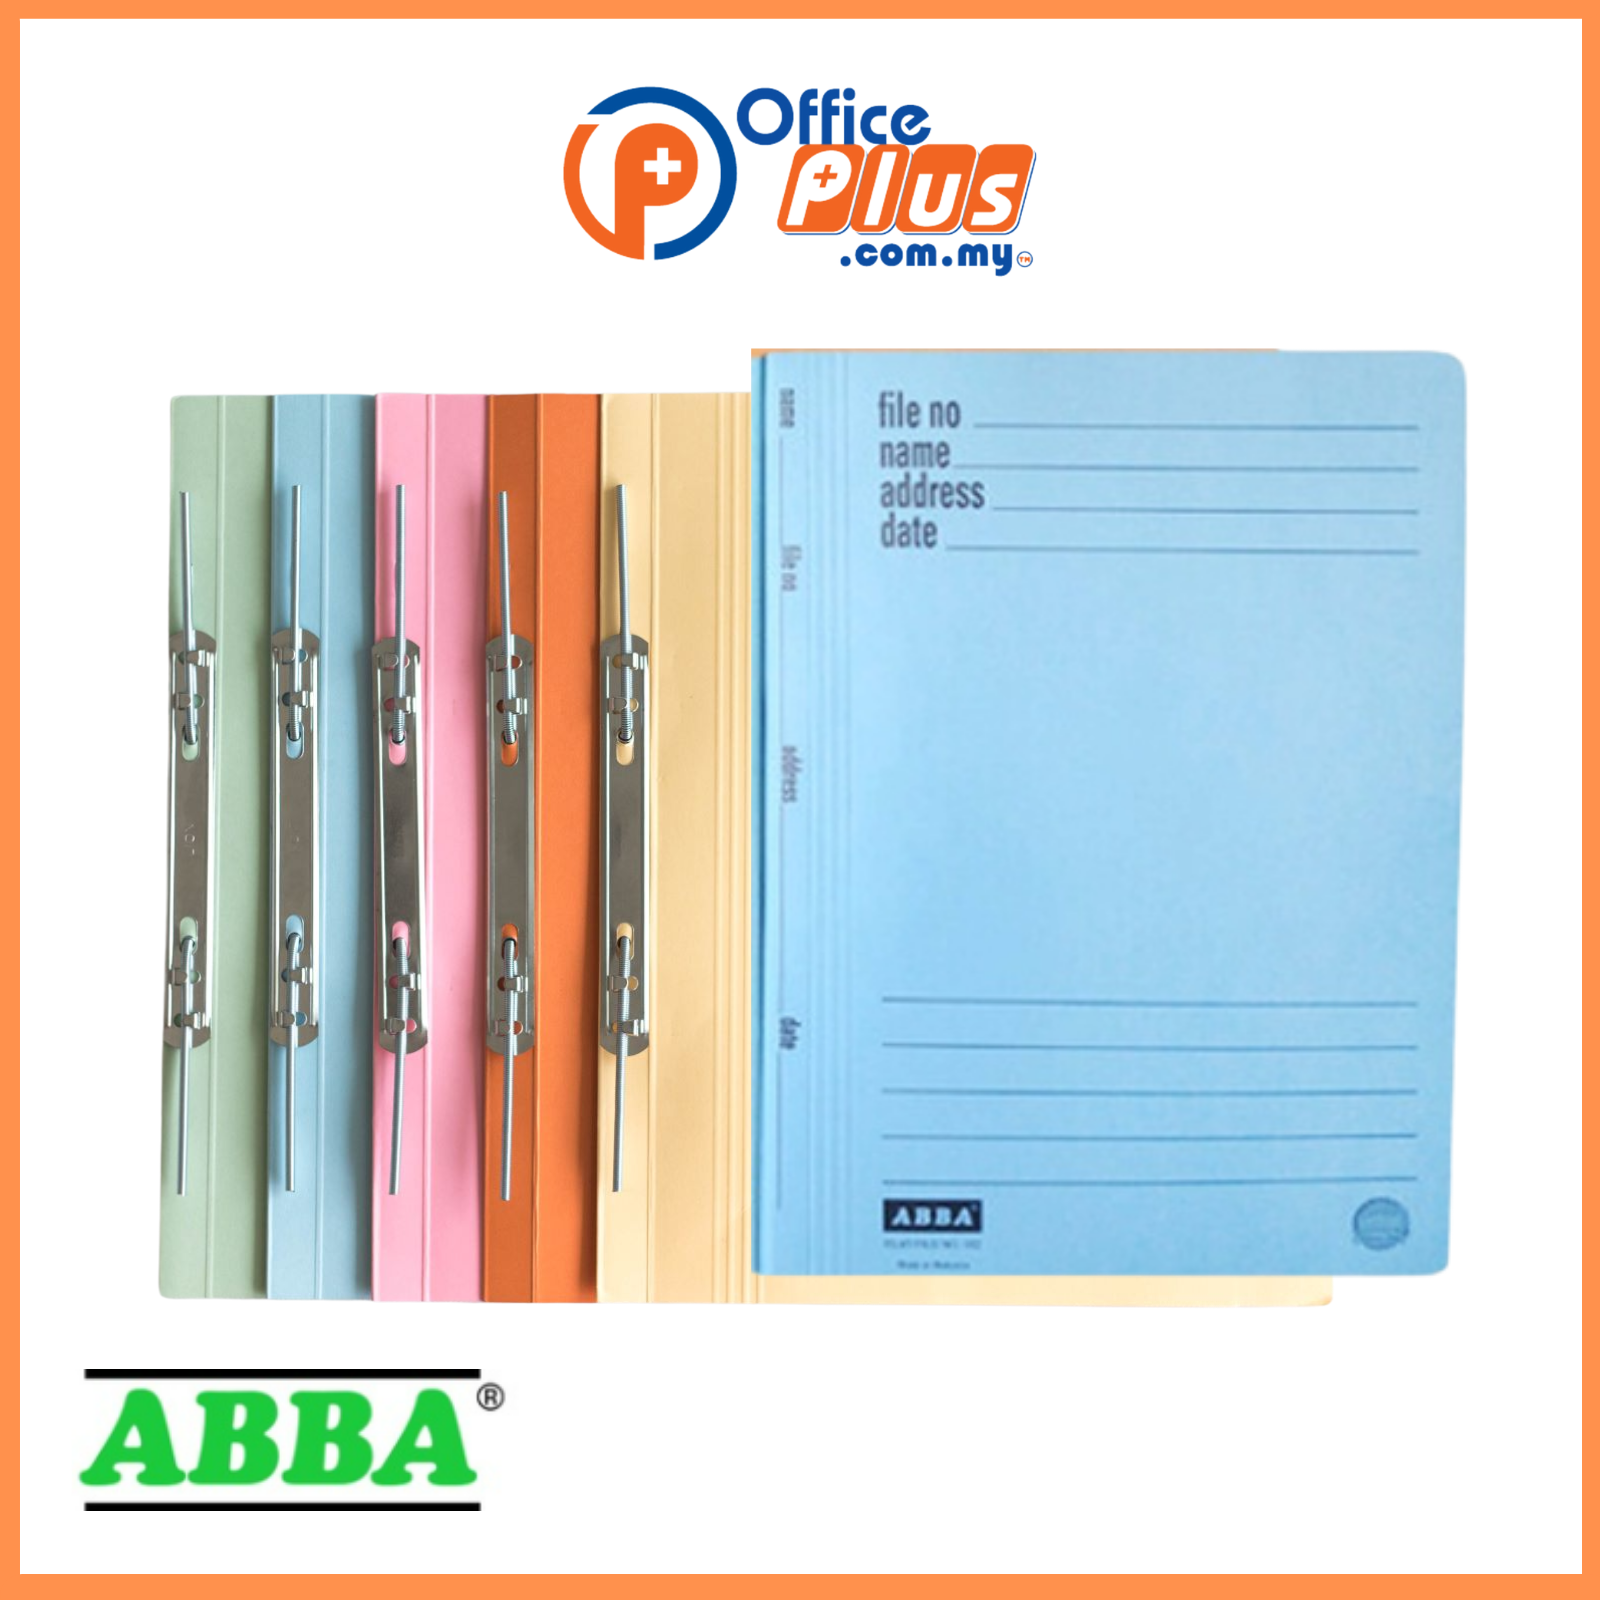 ABBA Flat File 102 Series (420gsm) - OfficePlus